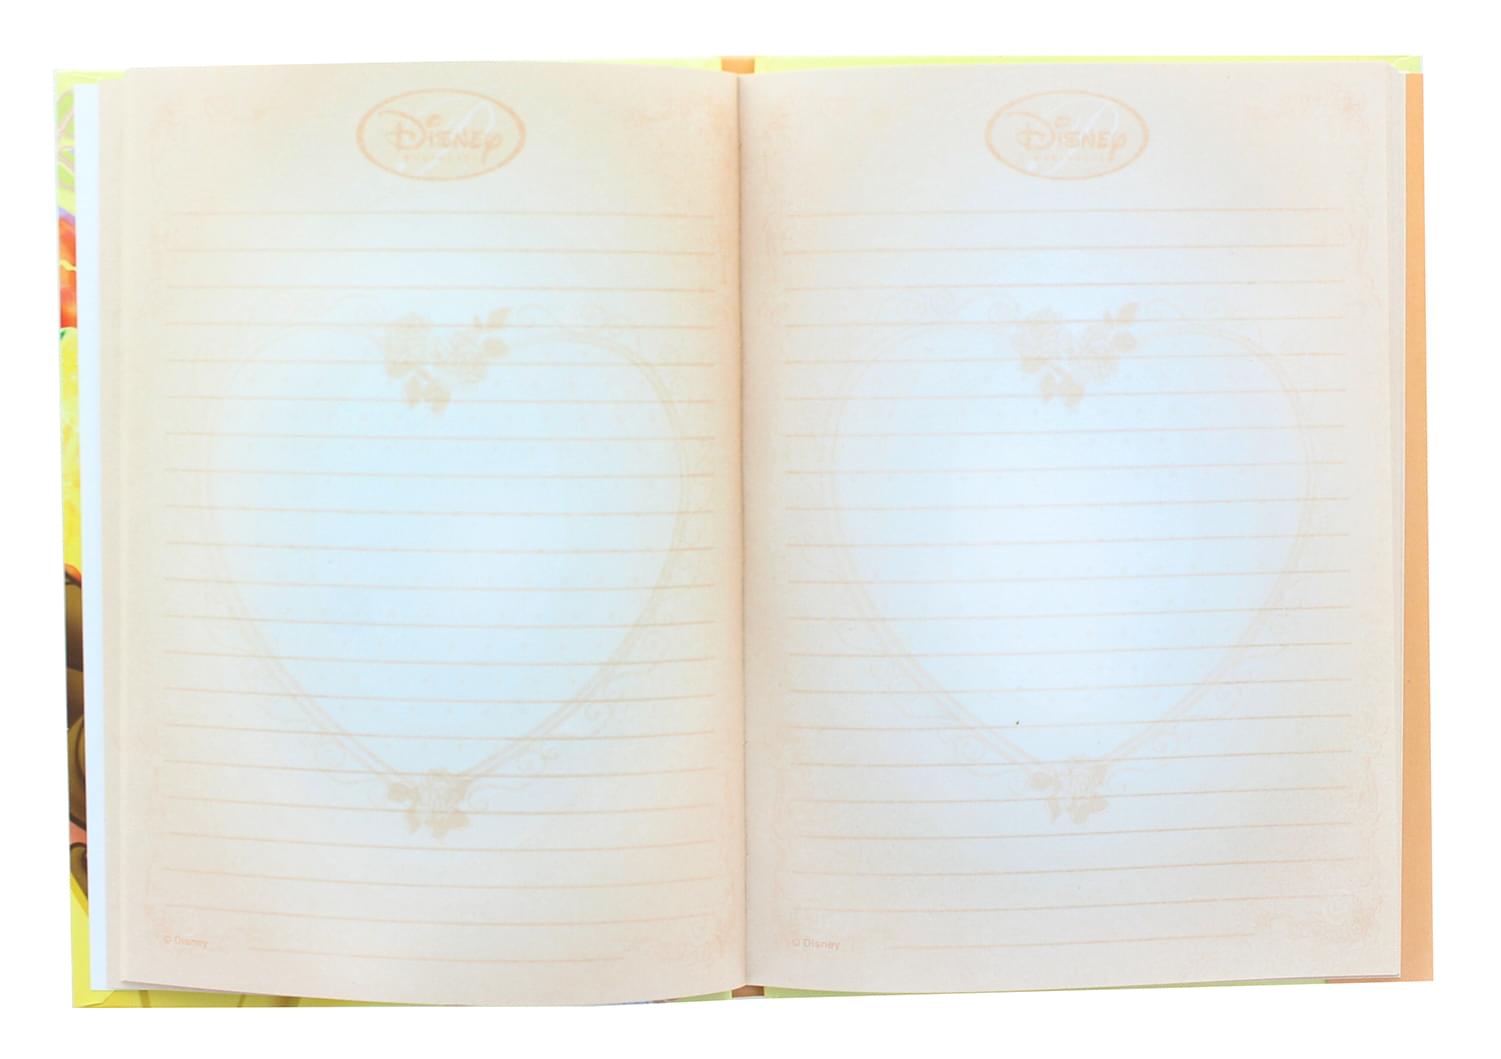 Disney Princess Belle 5x7 Inch Hardcover Journal